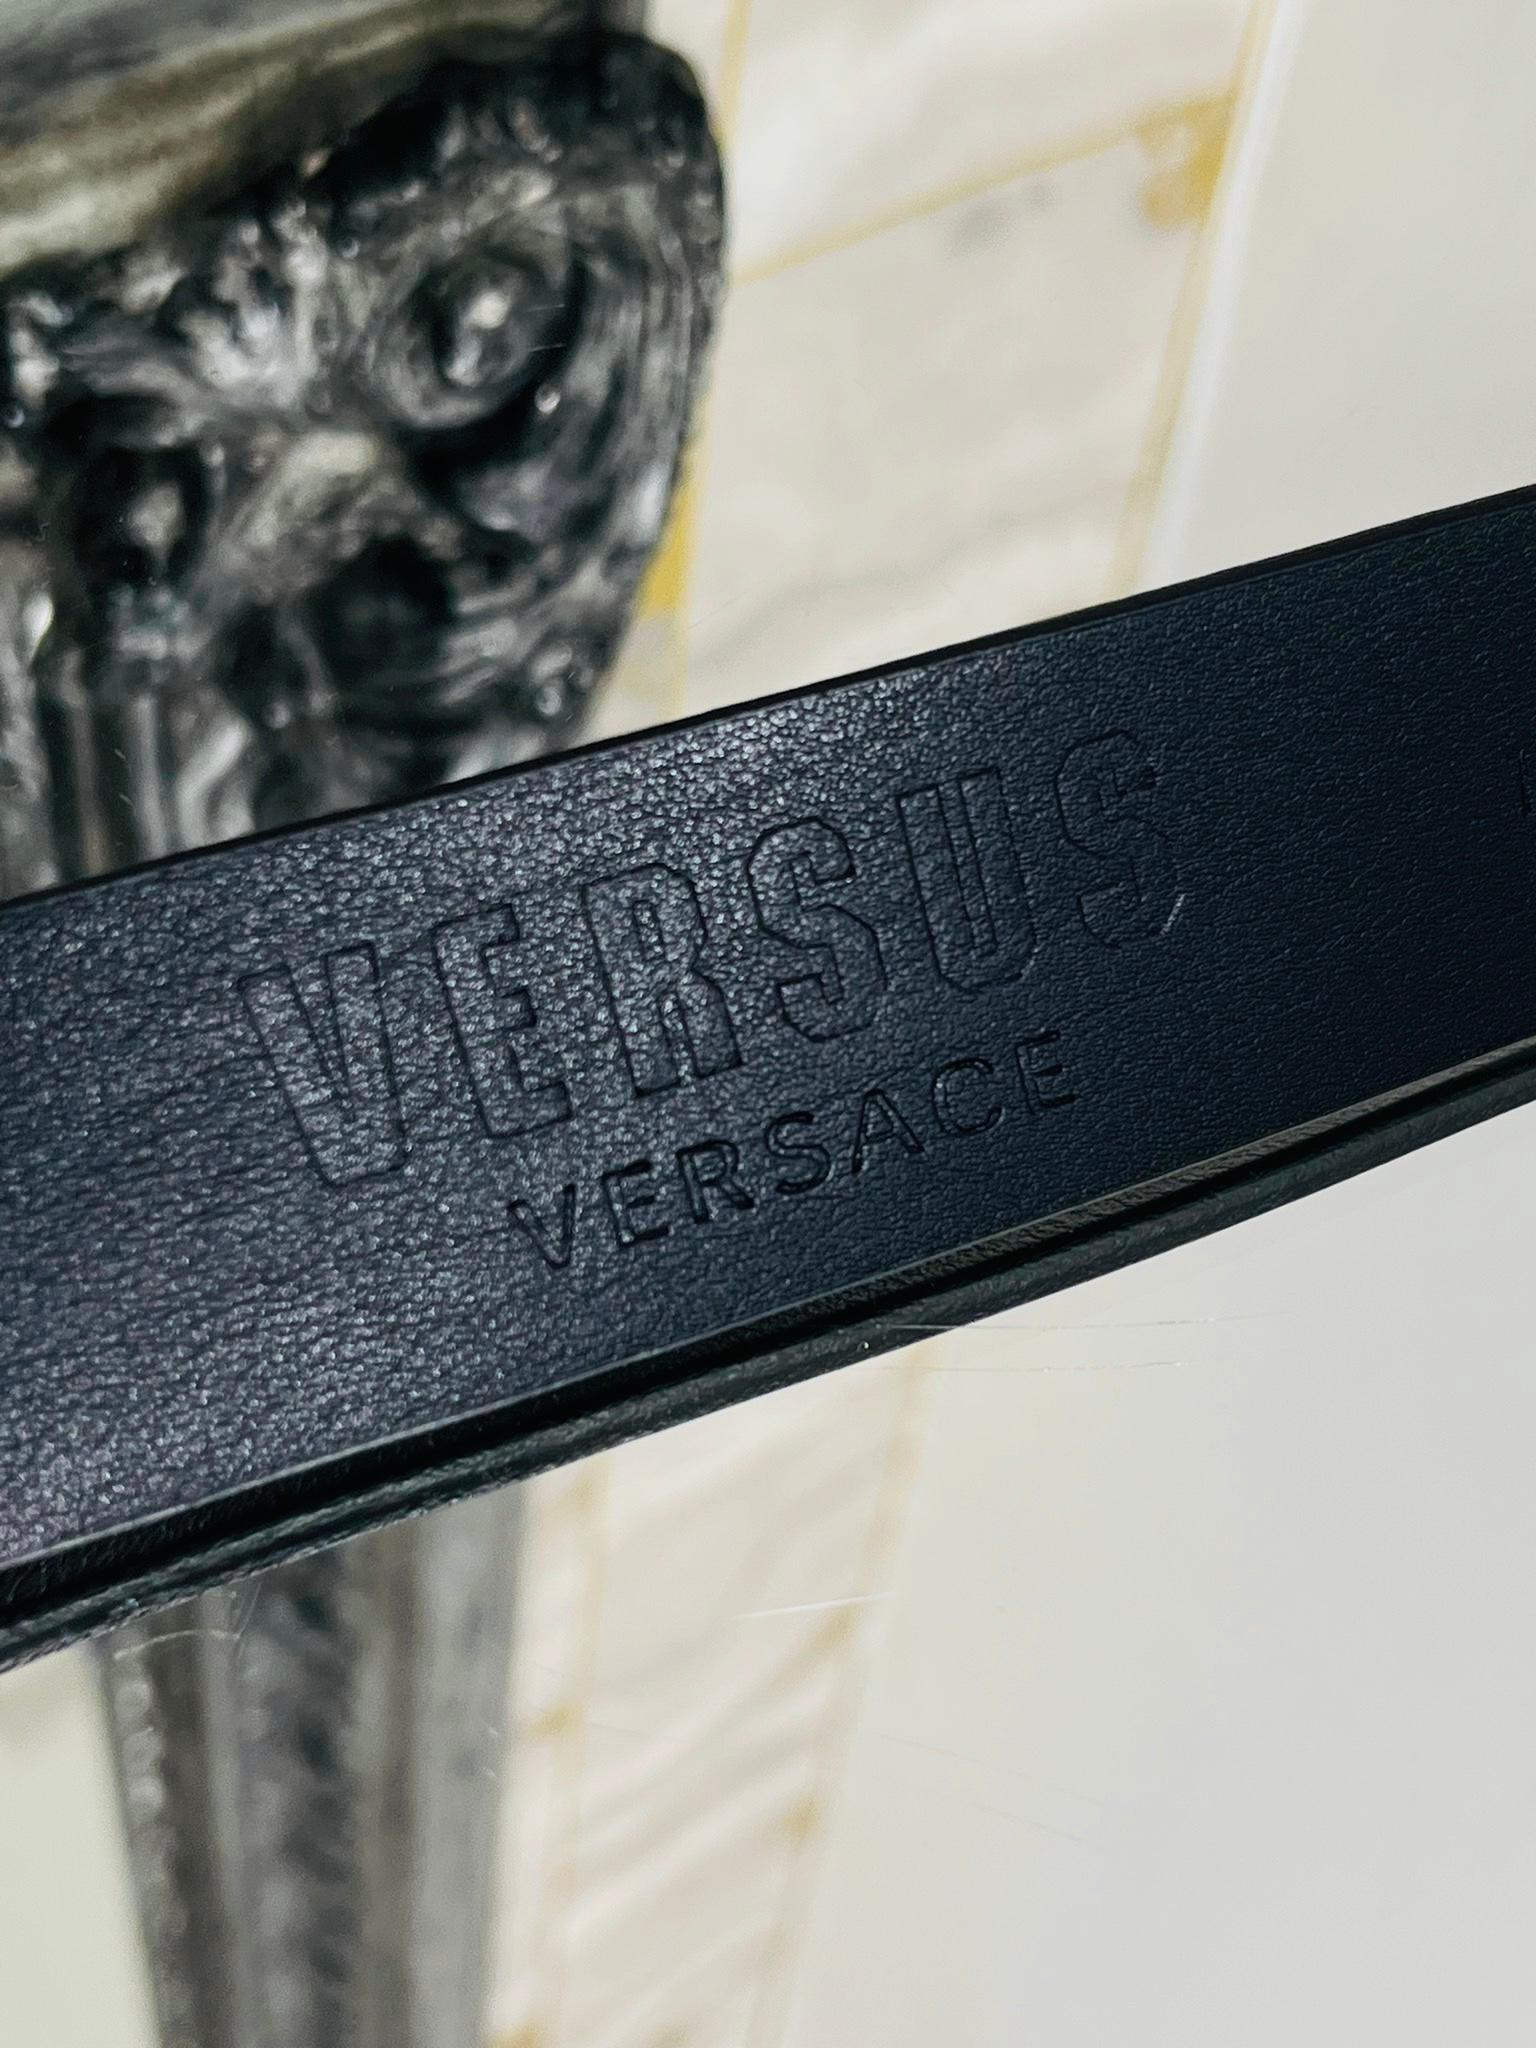 Versus Versace Lion Head Leather Belt 3